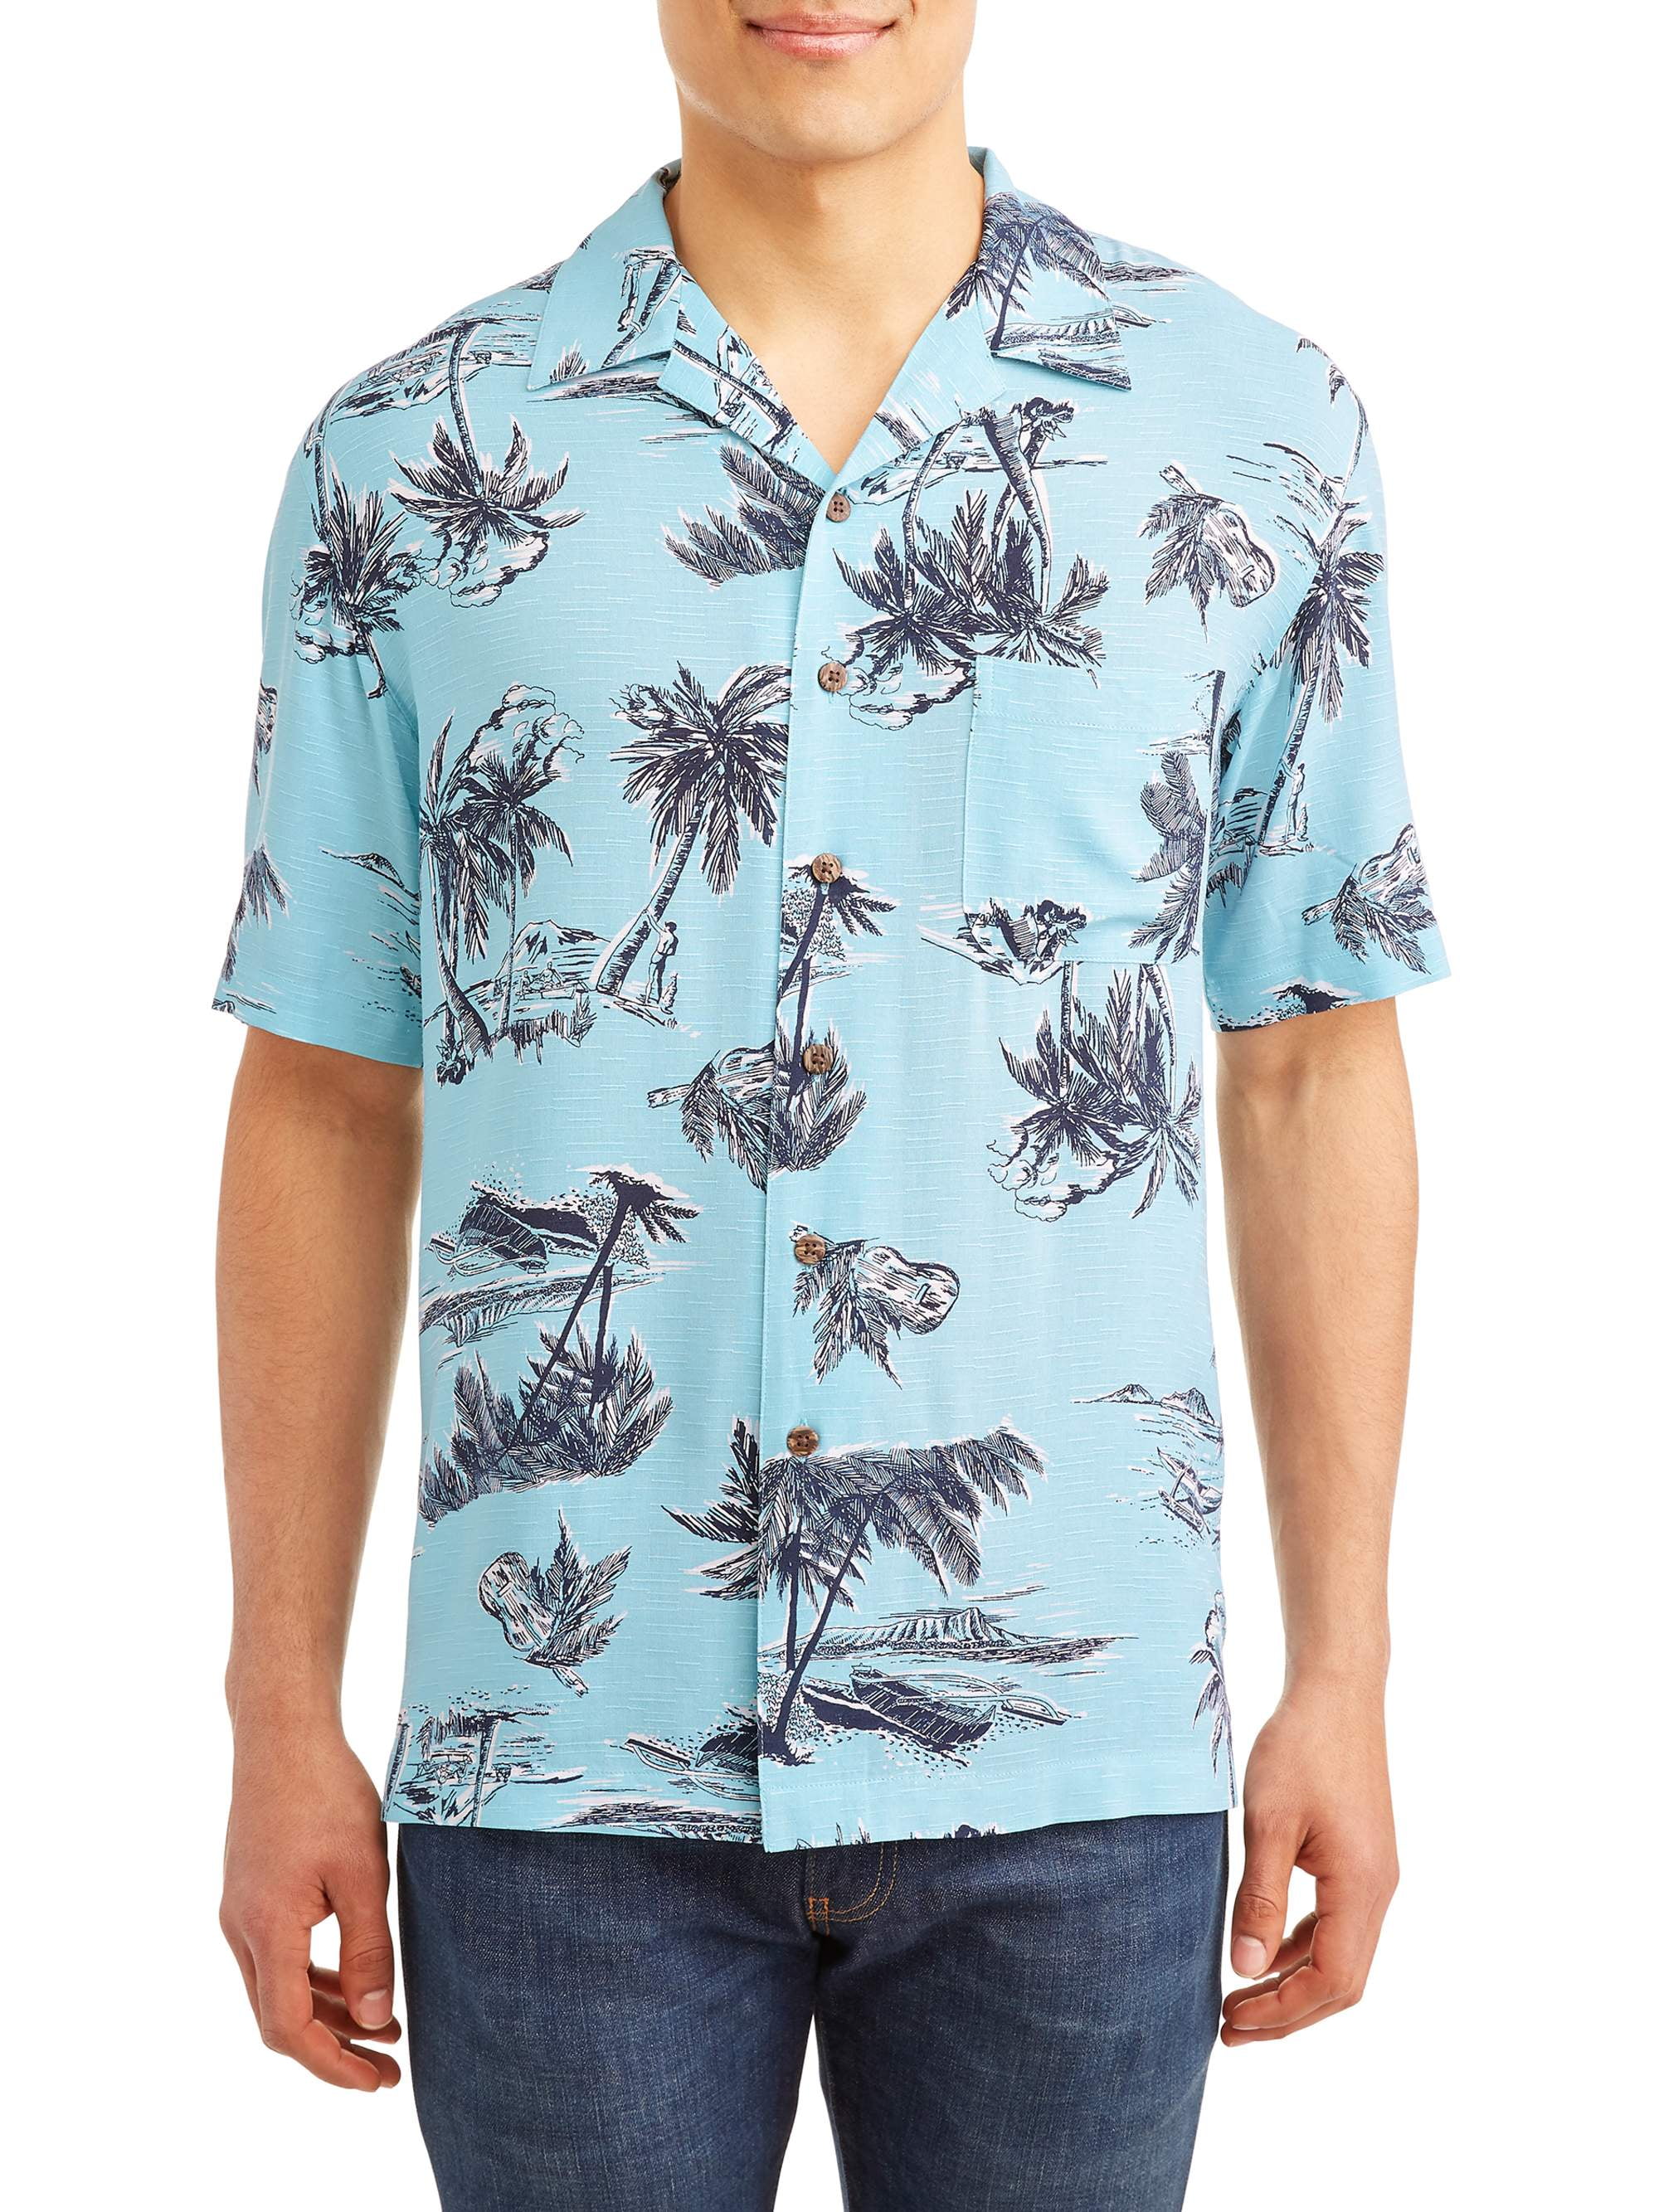 George Short Sleeve Printed Rayon Woven Shirt up to 5xl - Walmart.com